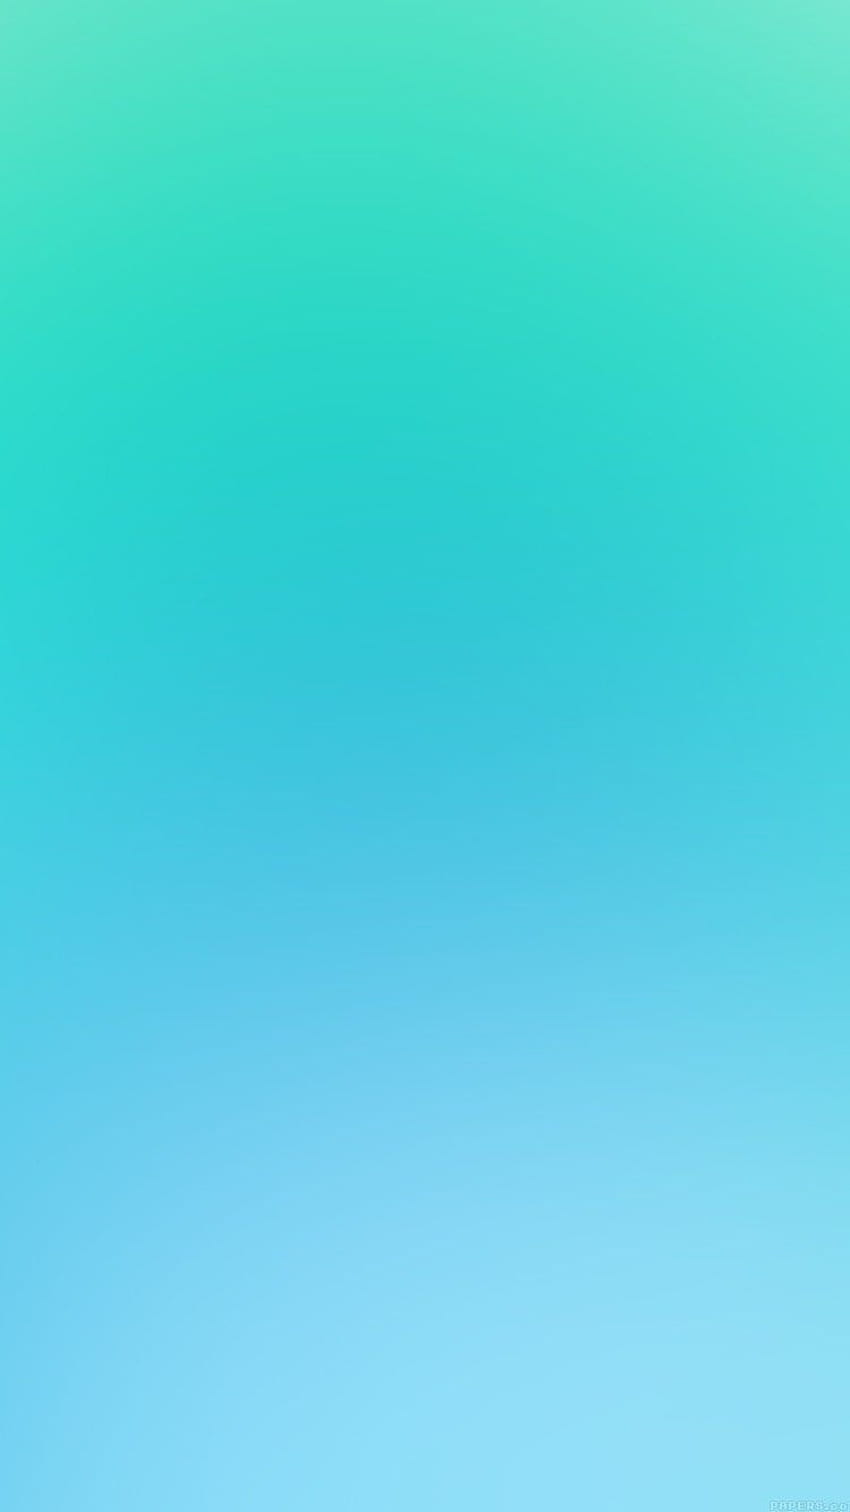 Gradiente azul verde - iPhone abstracto calmante, azul apenado fondo de pantalla del teléfono